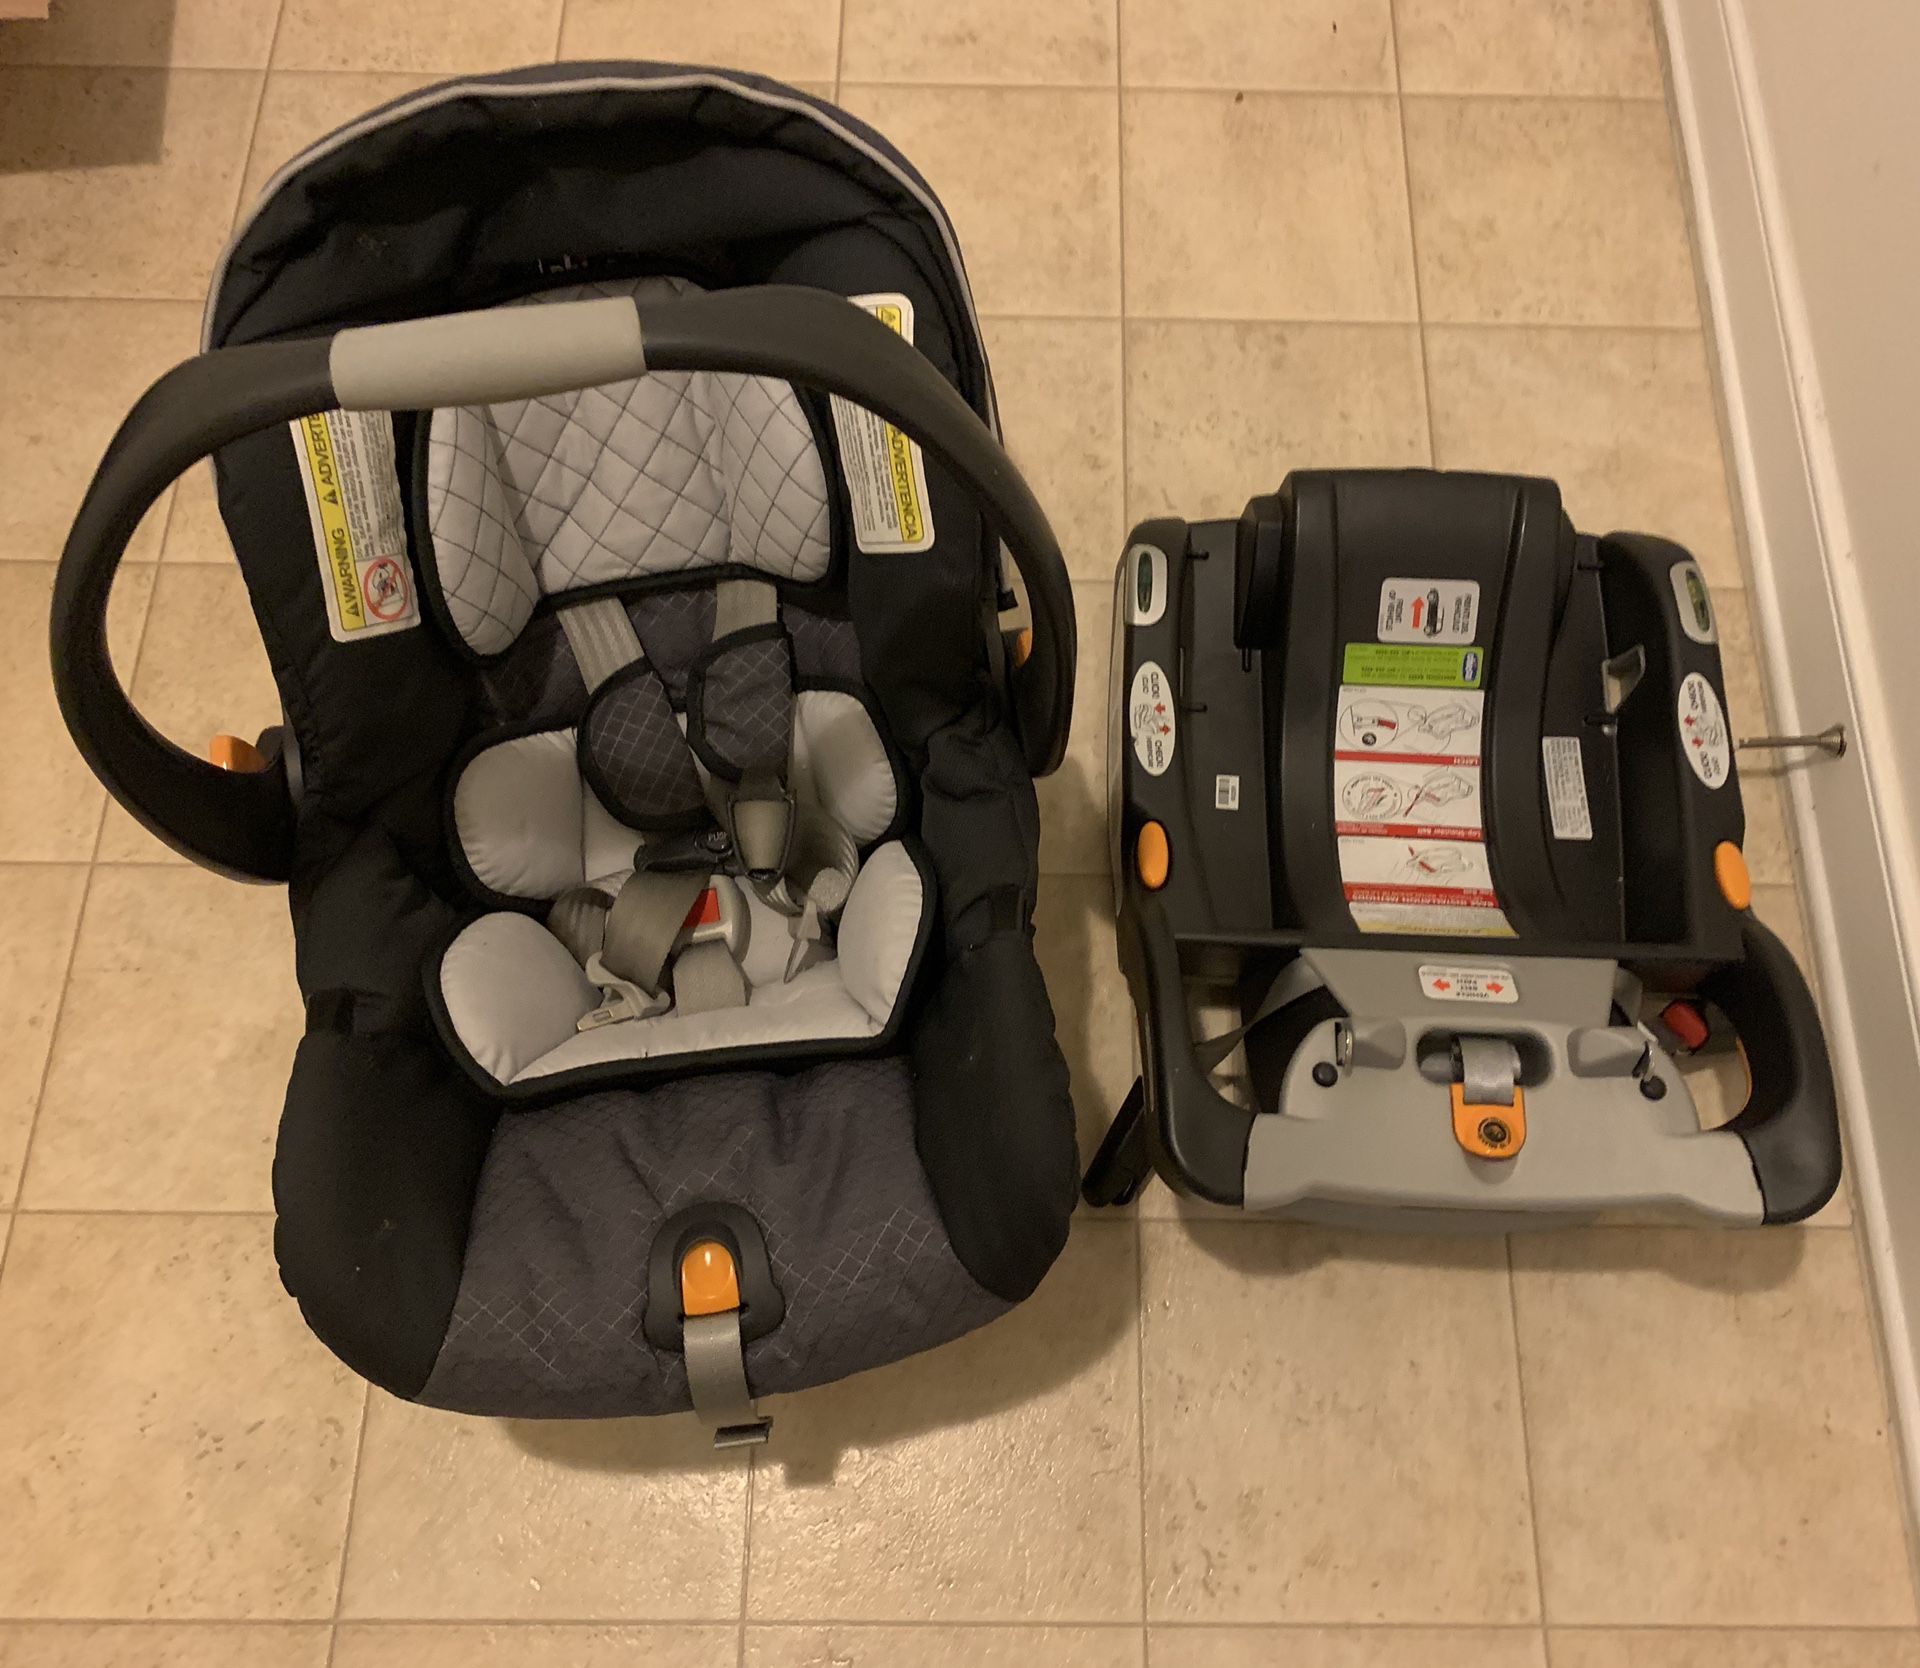 Chicco KeyFit 30 Infant Car Seat & Base